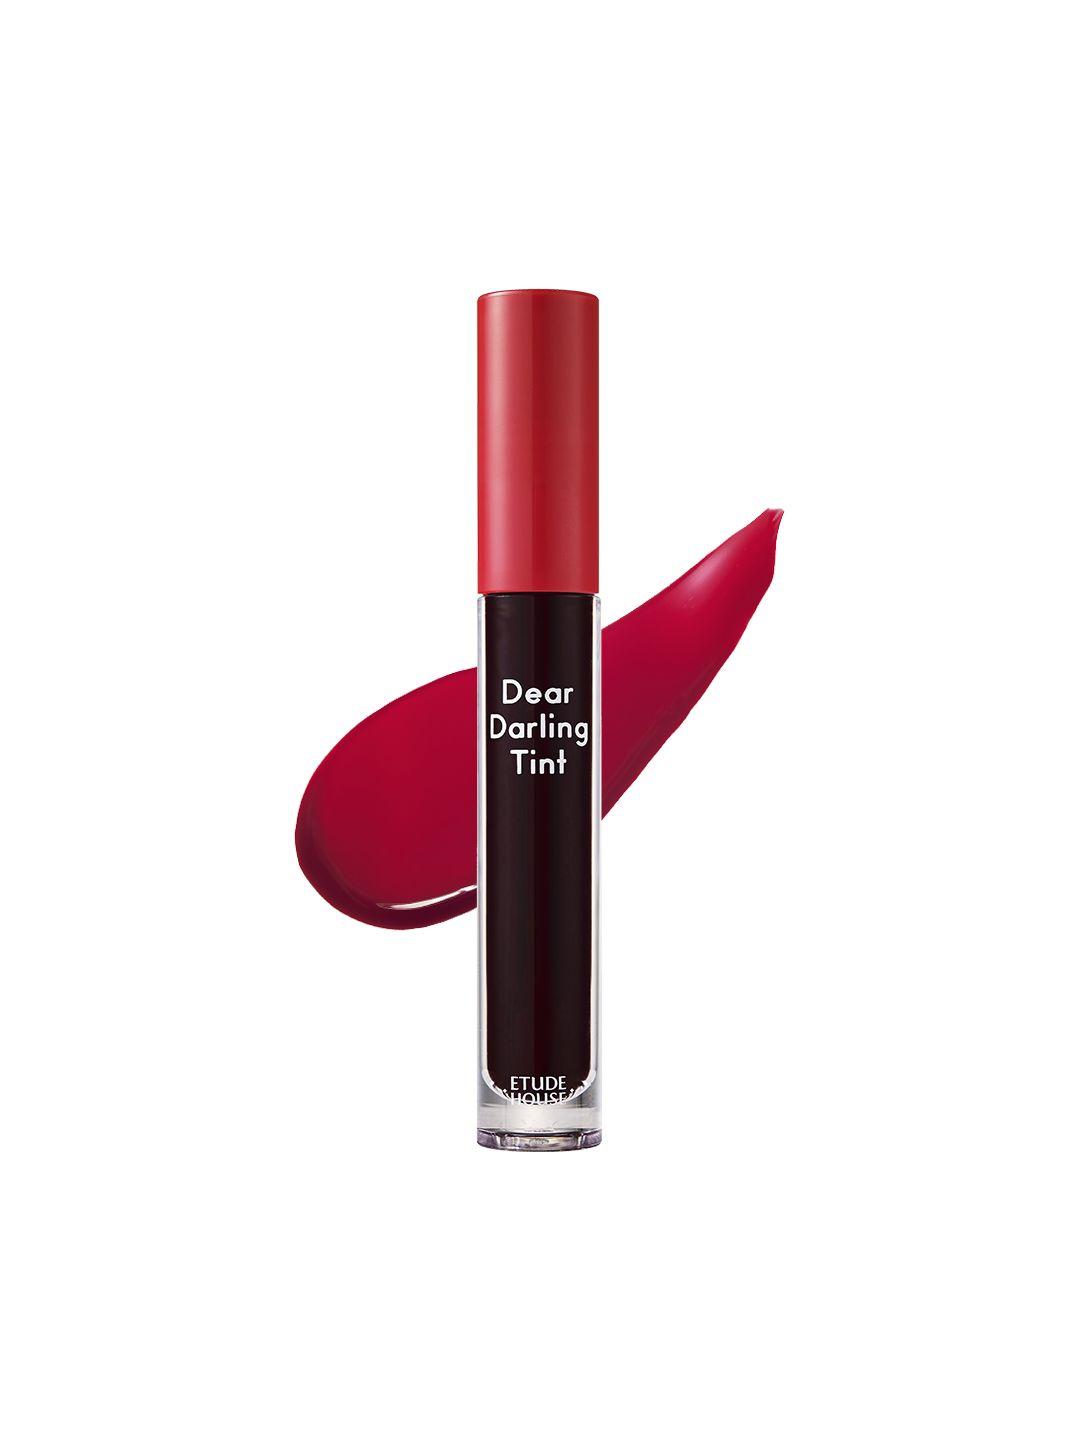 etude dear darling water gel lip & cheek tint lipstick 5 g - dracula red rd302